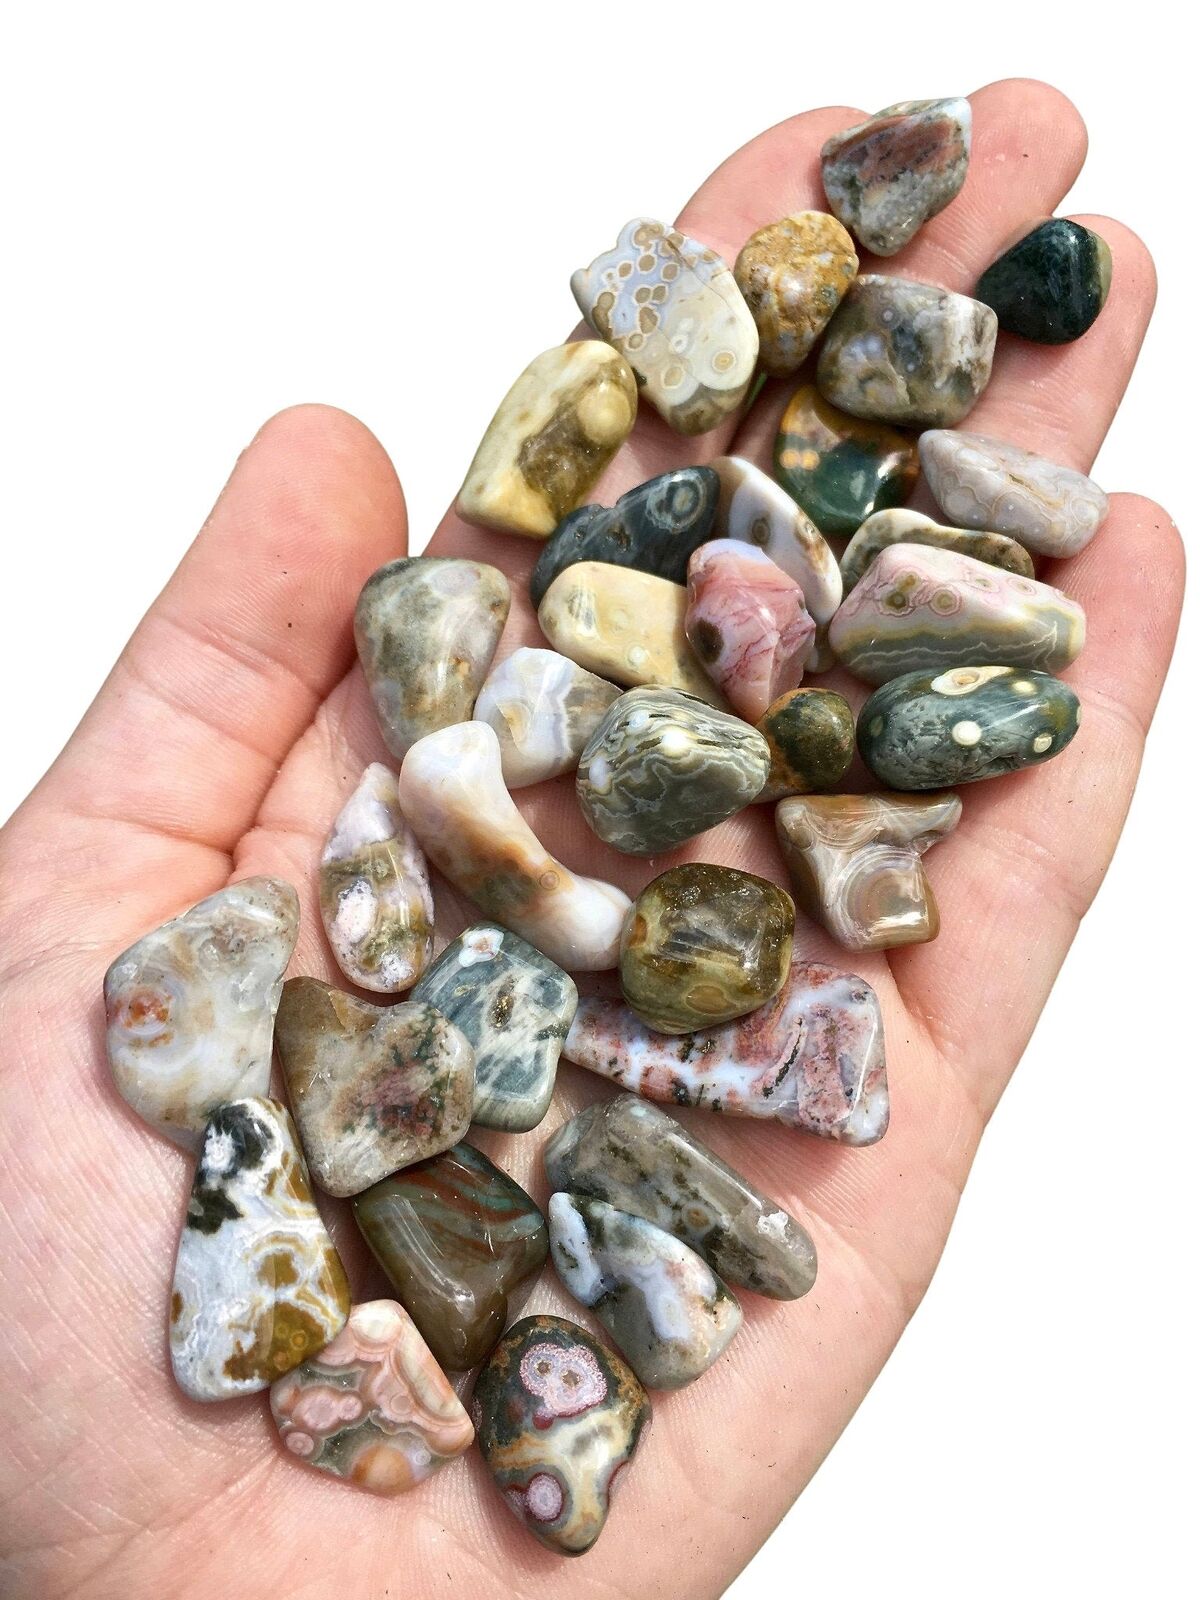 Ocean Jasper Tumbled Stone (Mini) Polished Natural Ocean Jasper from Madagascar